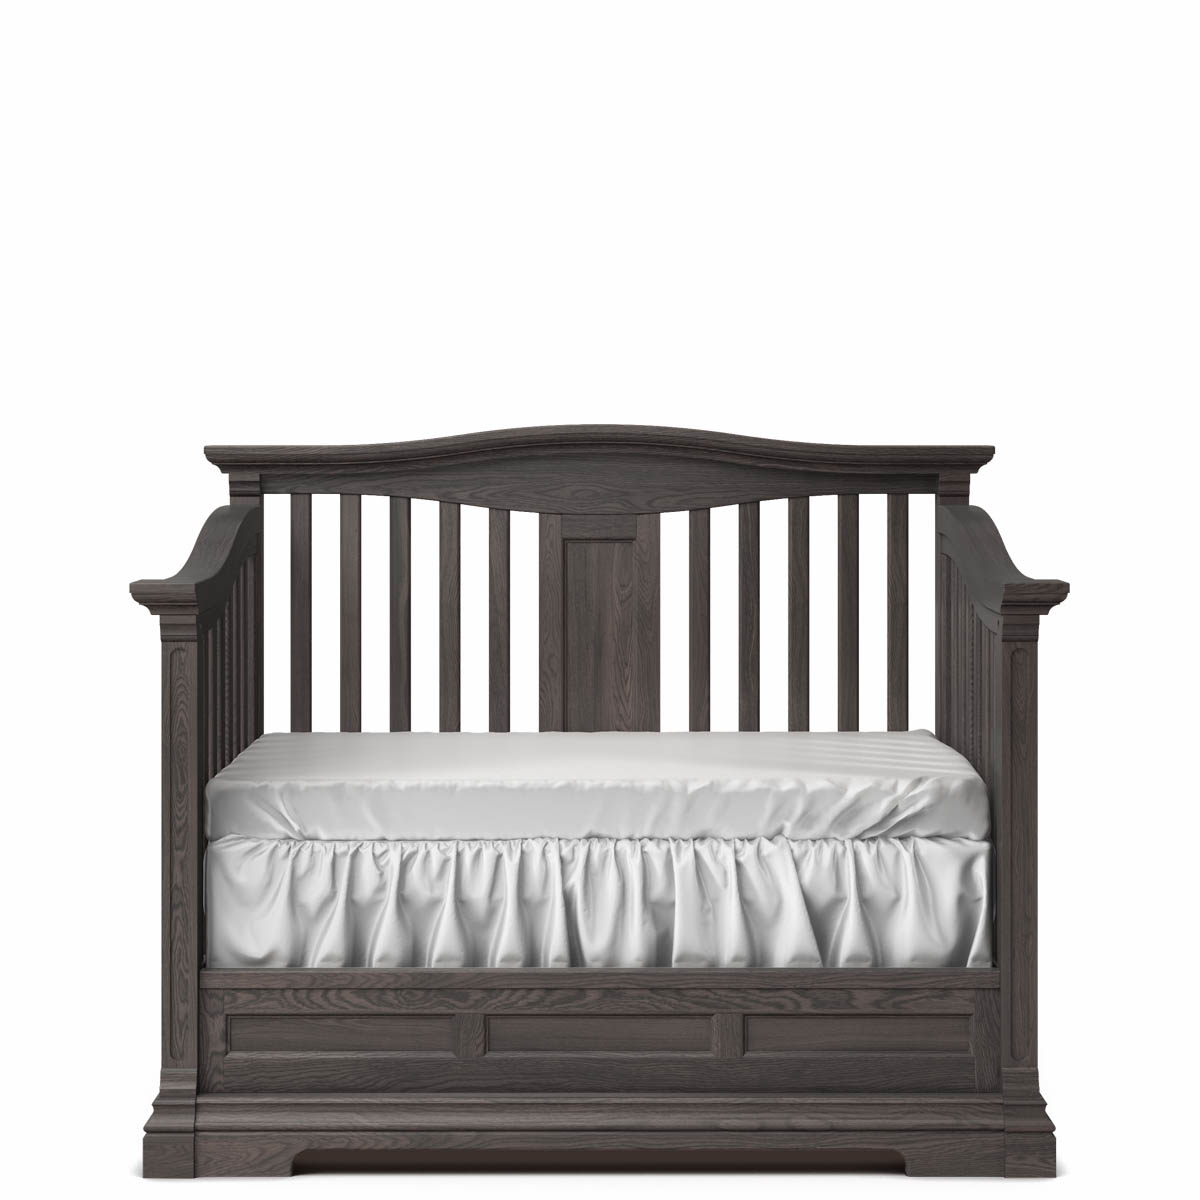 Romina Imperio Convertible Crib with Slat Back